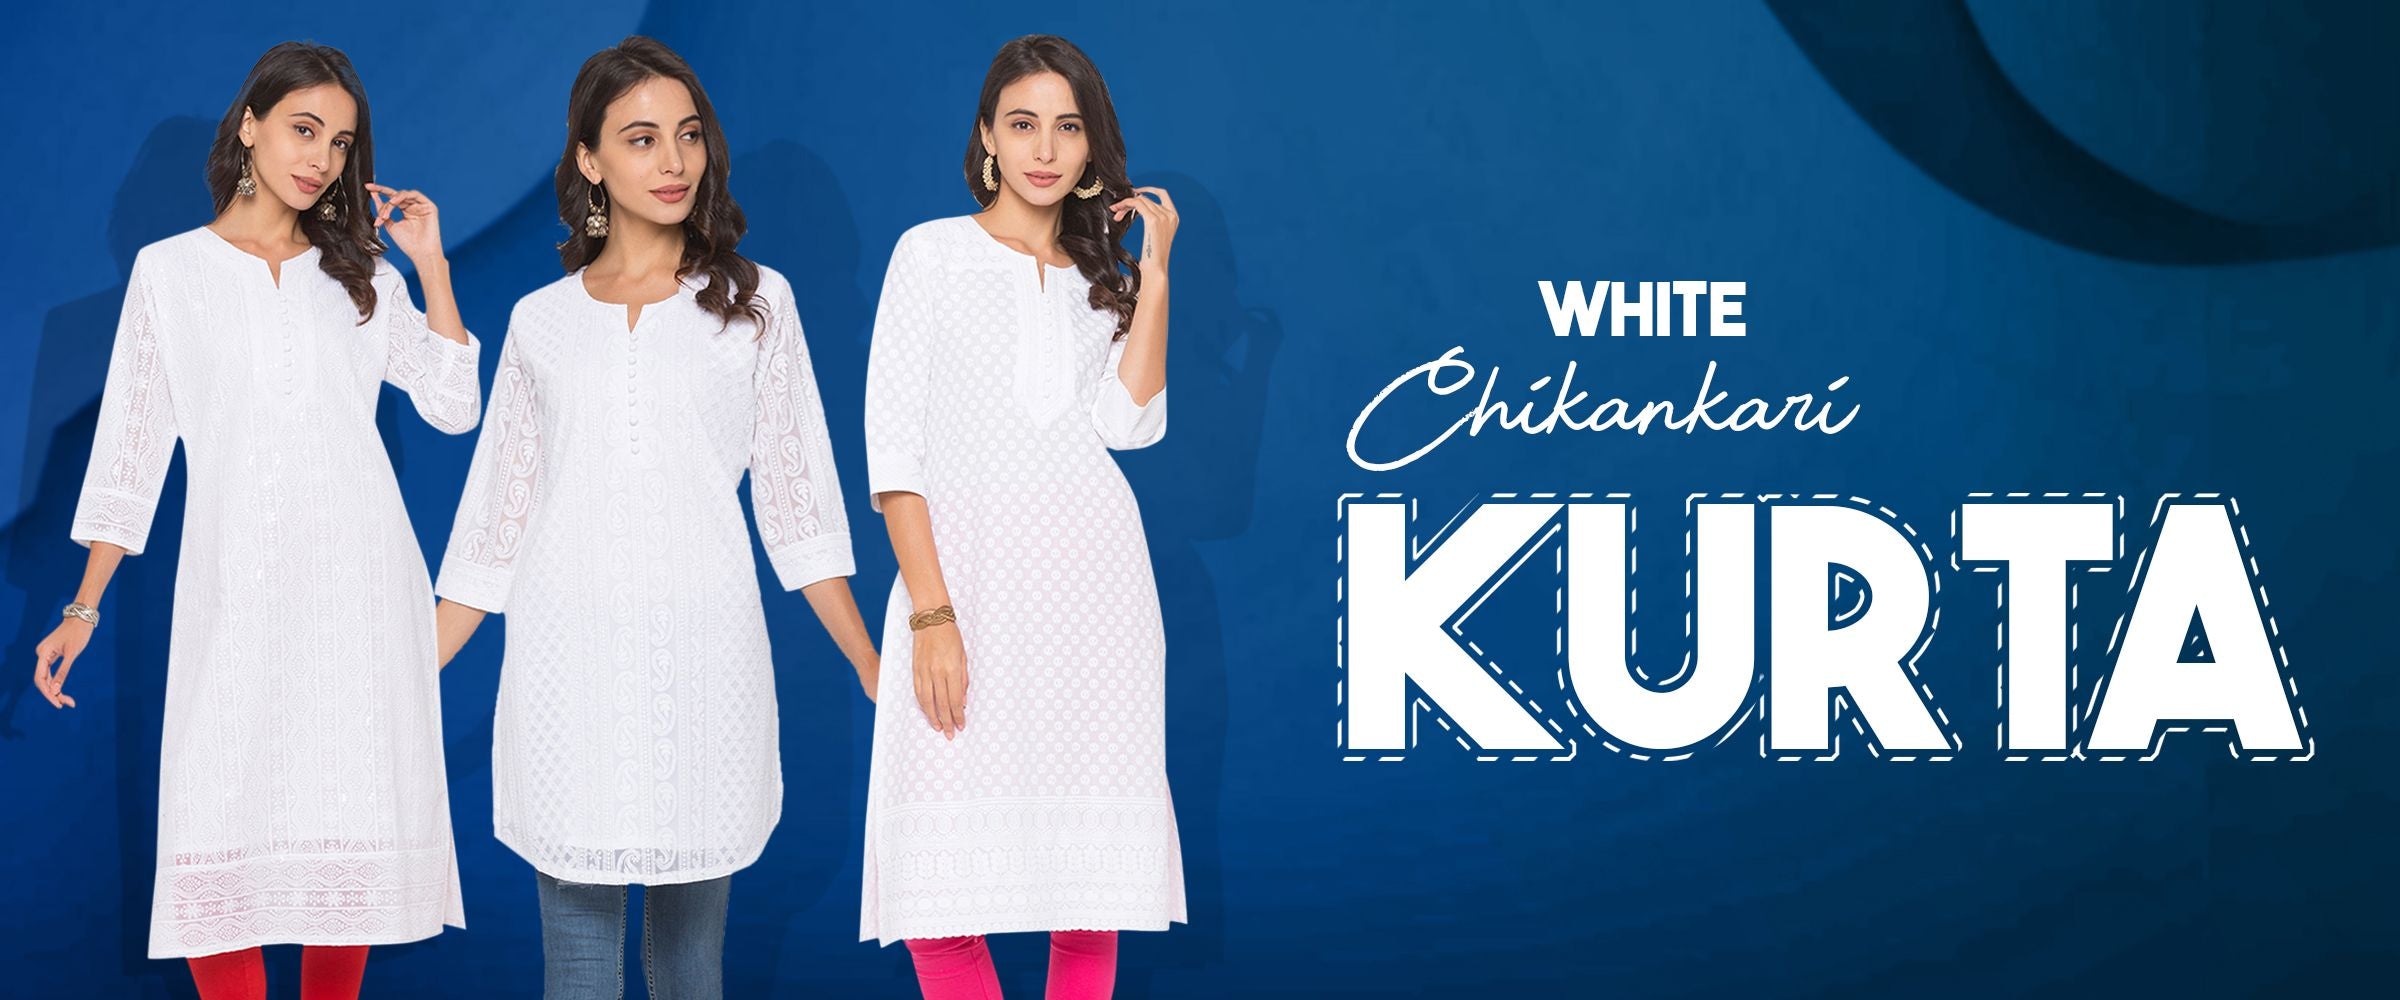 Lucknowi Kurtis Online: Effortlessly Stylish and Timeless Elegance